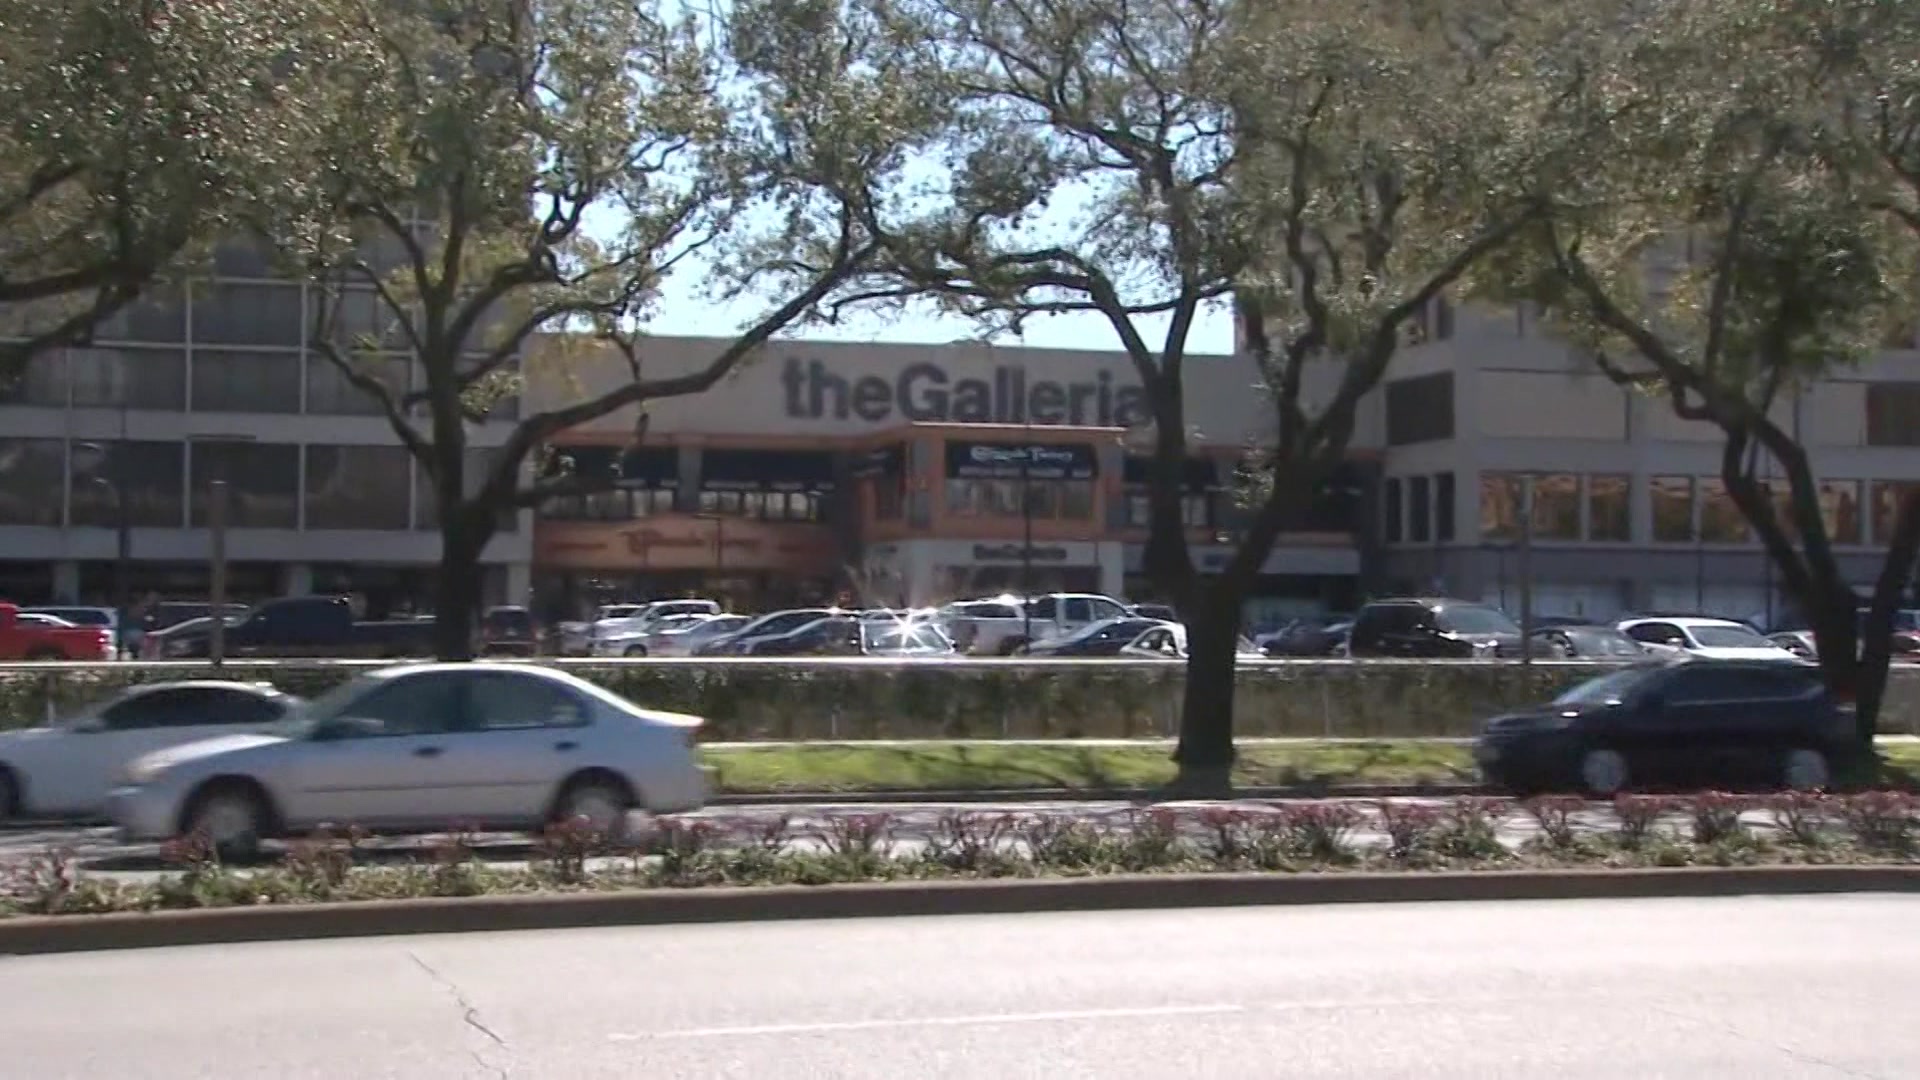 The Galleria in Houston, Texas Shopping Mall Walkthrough - June 2021 